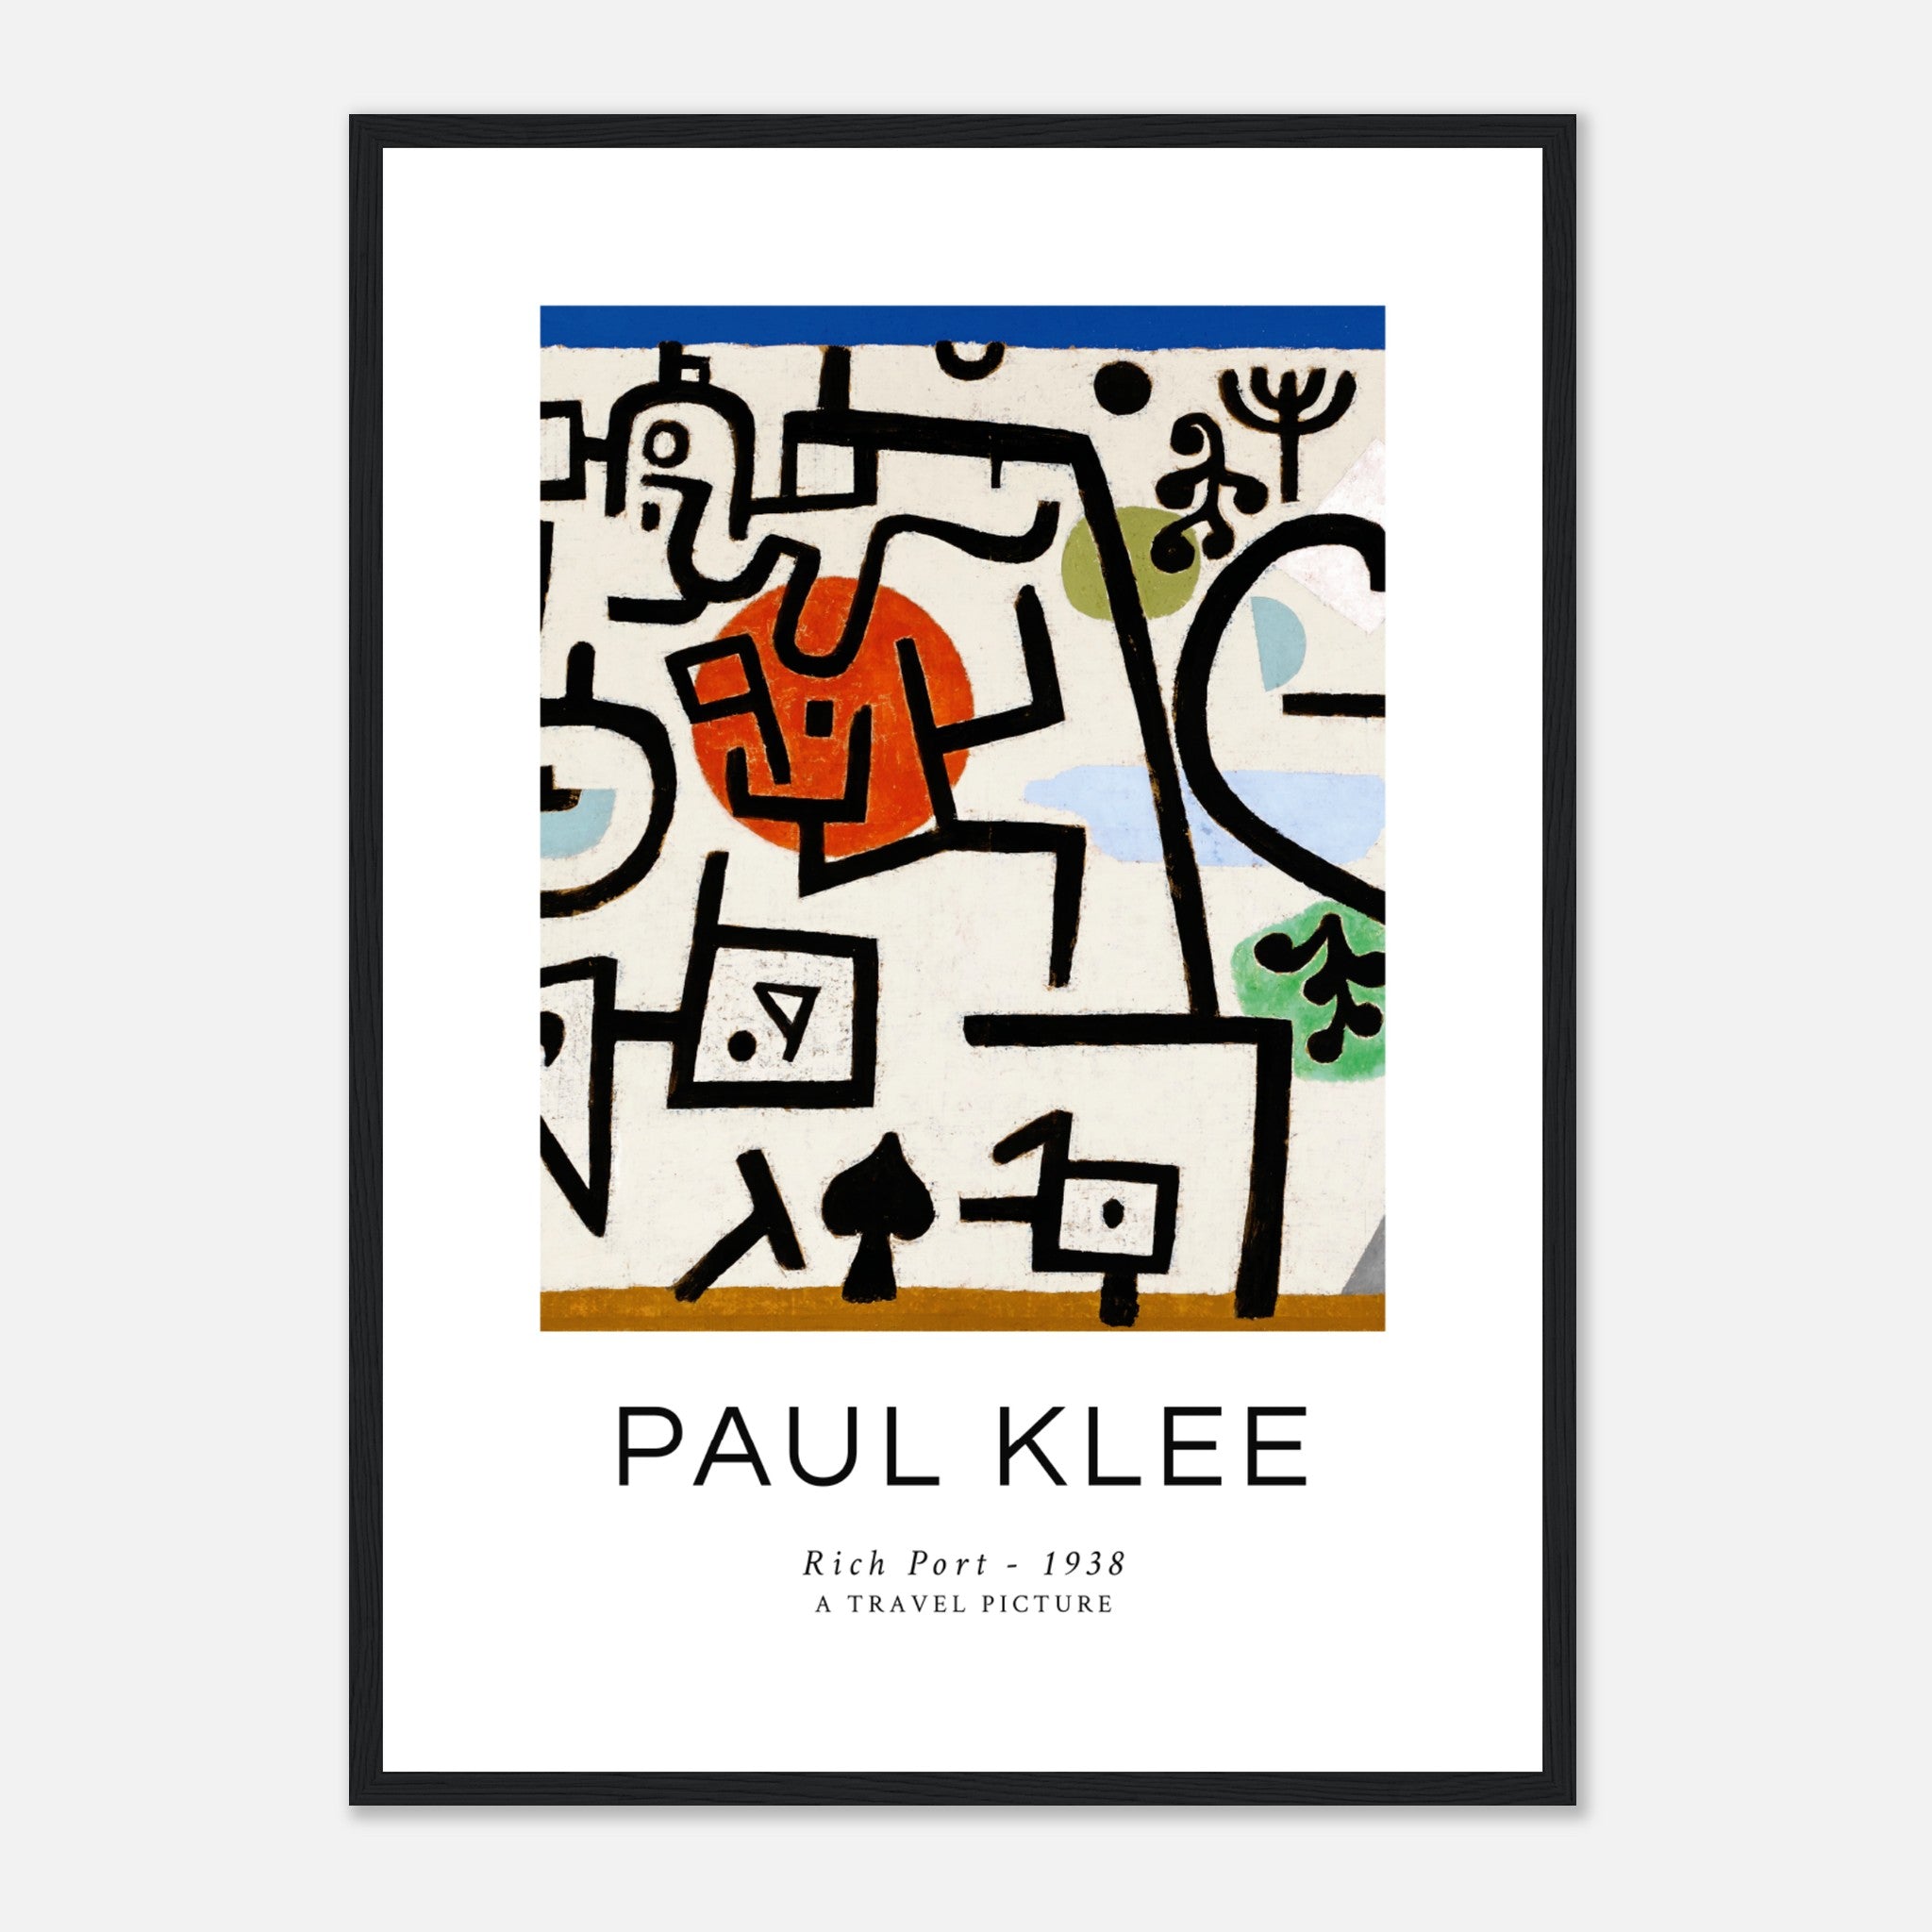 Paul Klee's Rich Port Poster